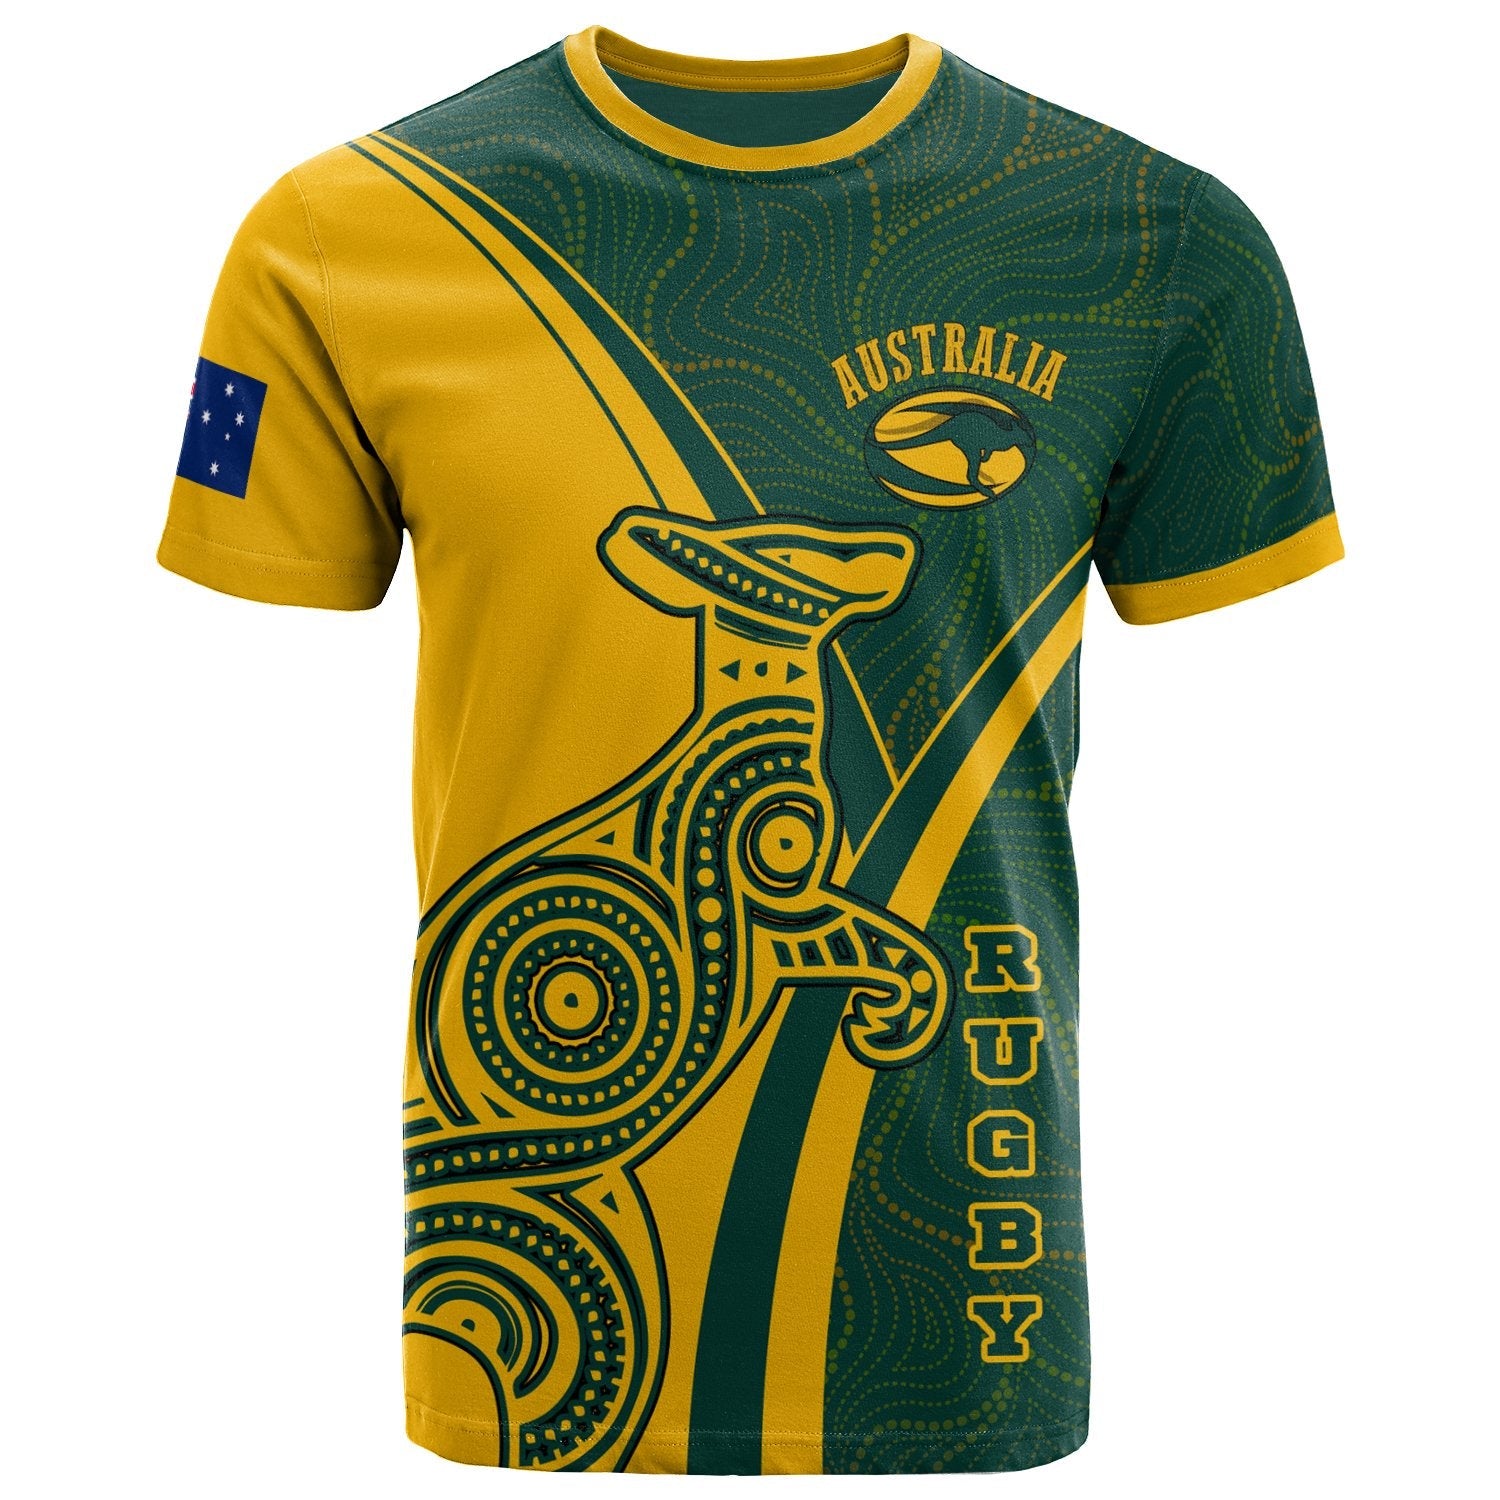 rugby-t-shirt-australian-rugby-kangaroo-aboriginal-patterns